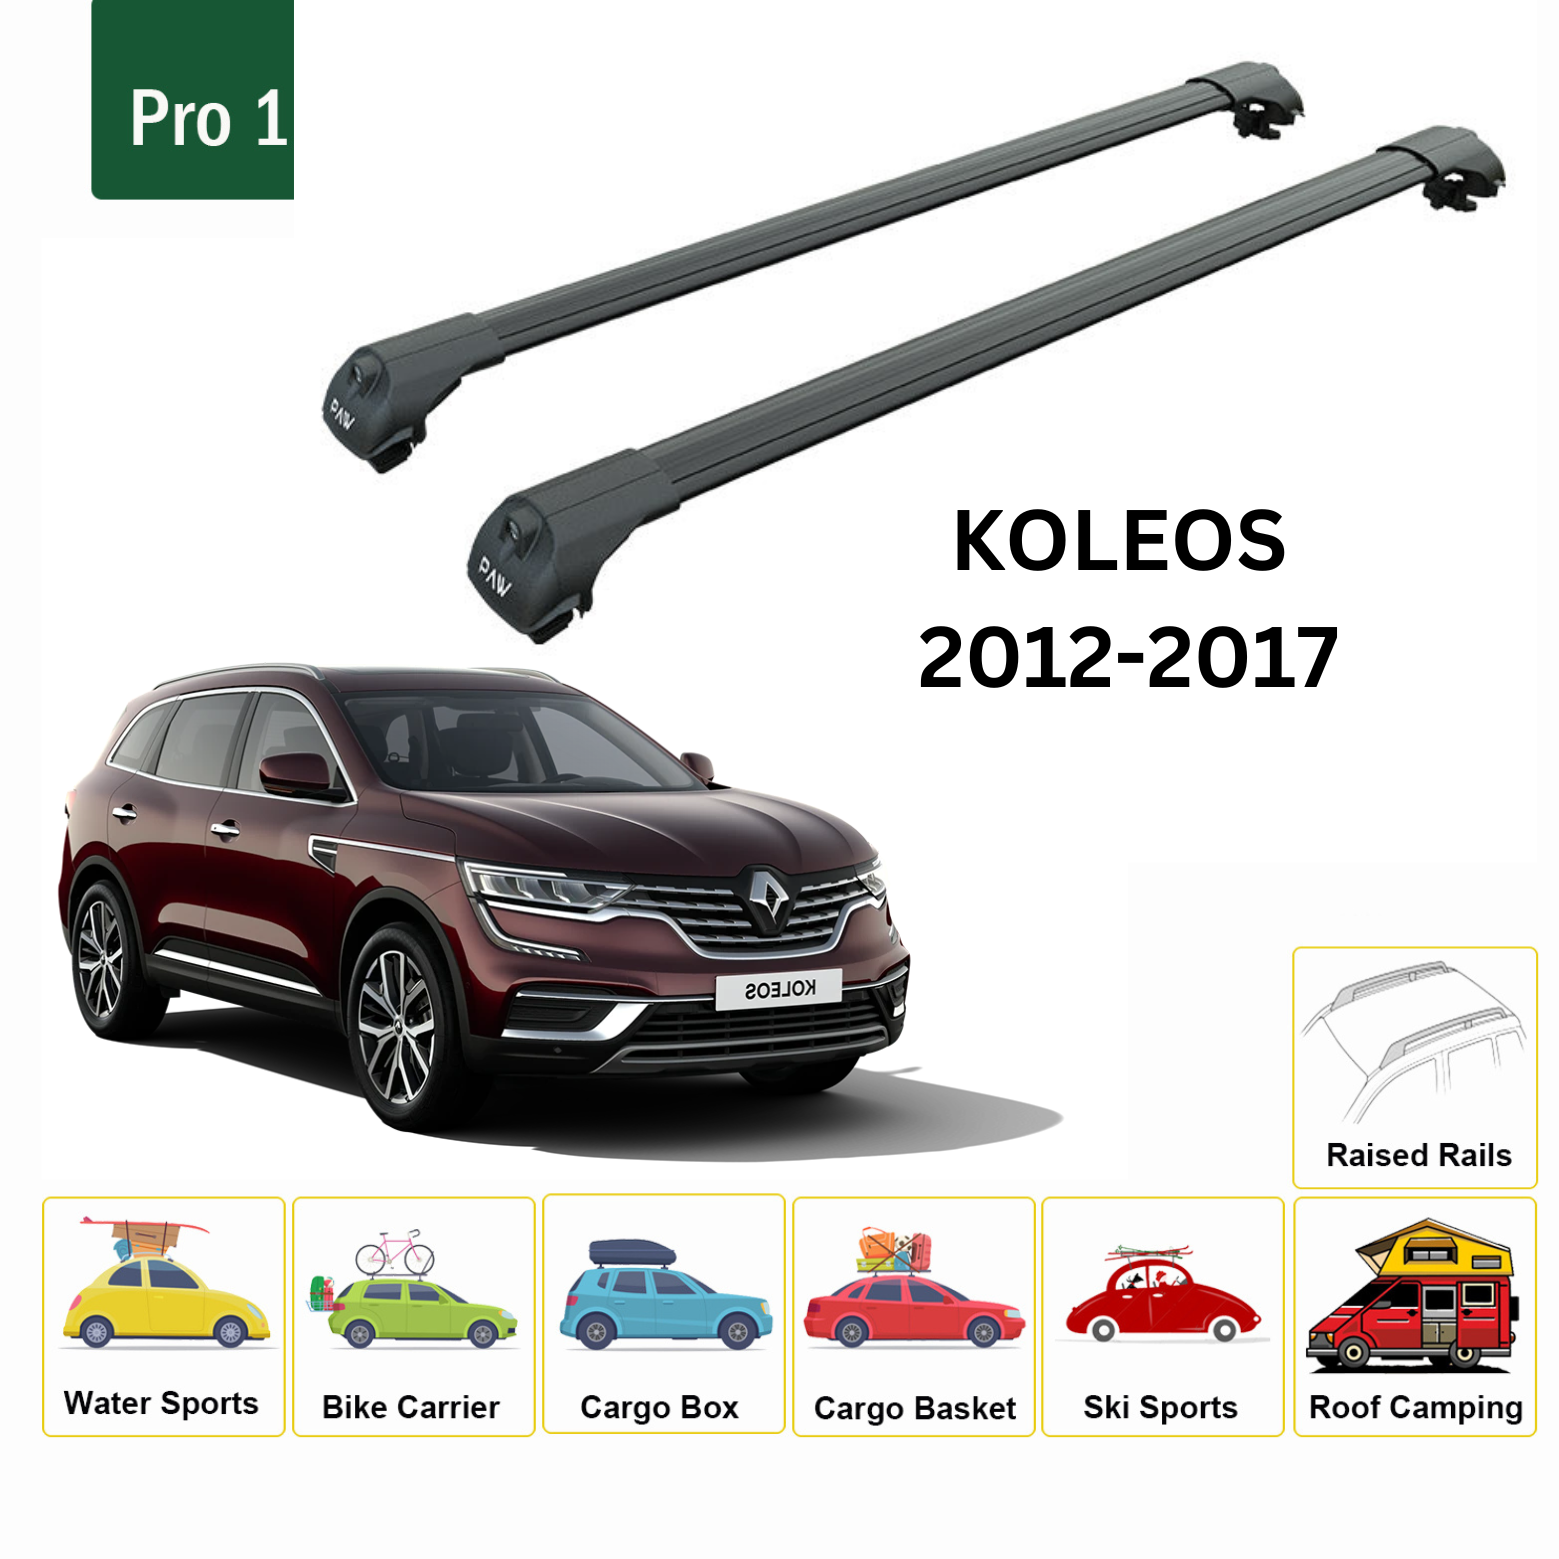 For Renault Koleos 2012-2017 Roof Rack System, Aluminium Cross Bar, Metal Bracket, Normal Roof, Black - 0